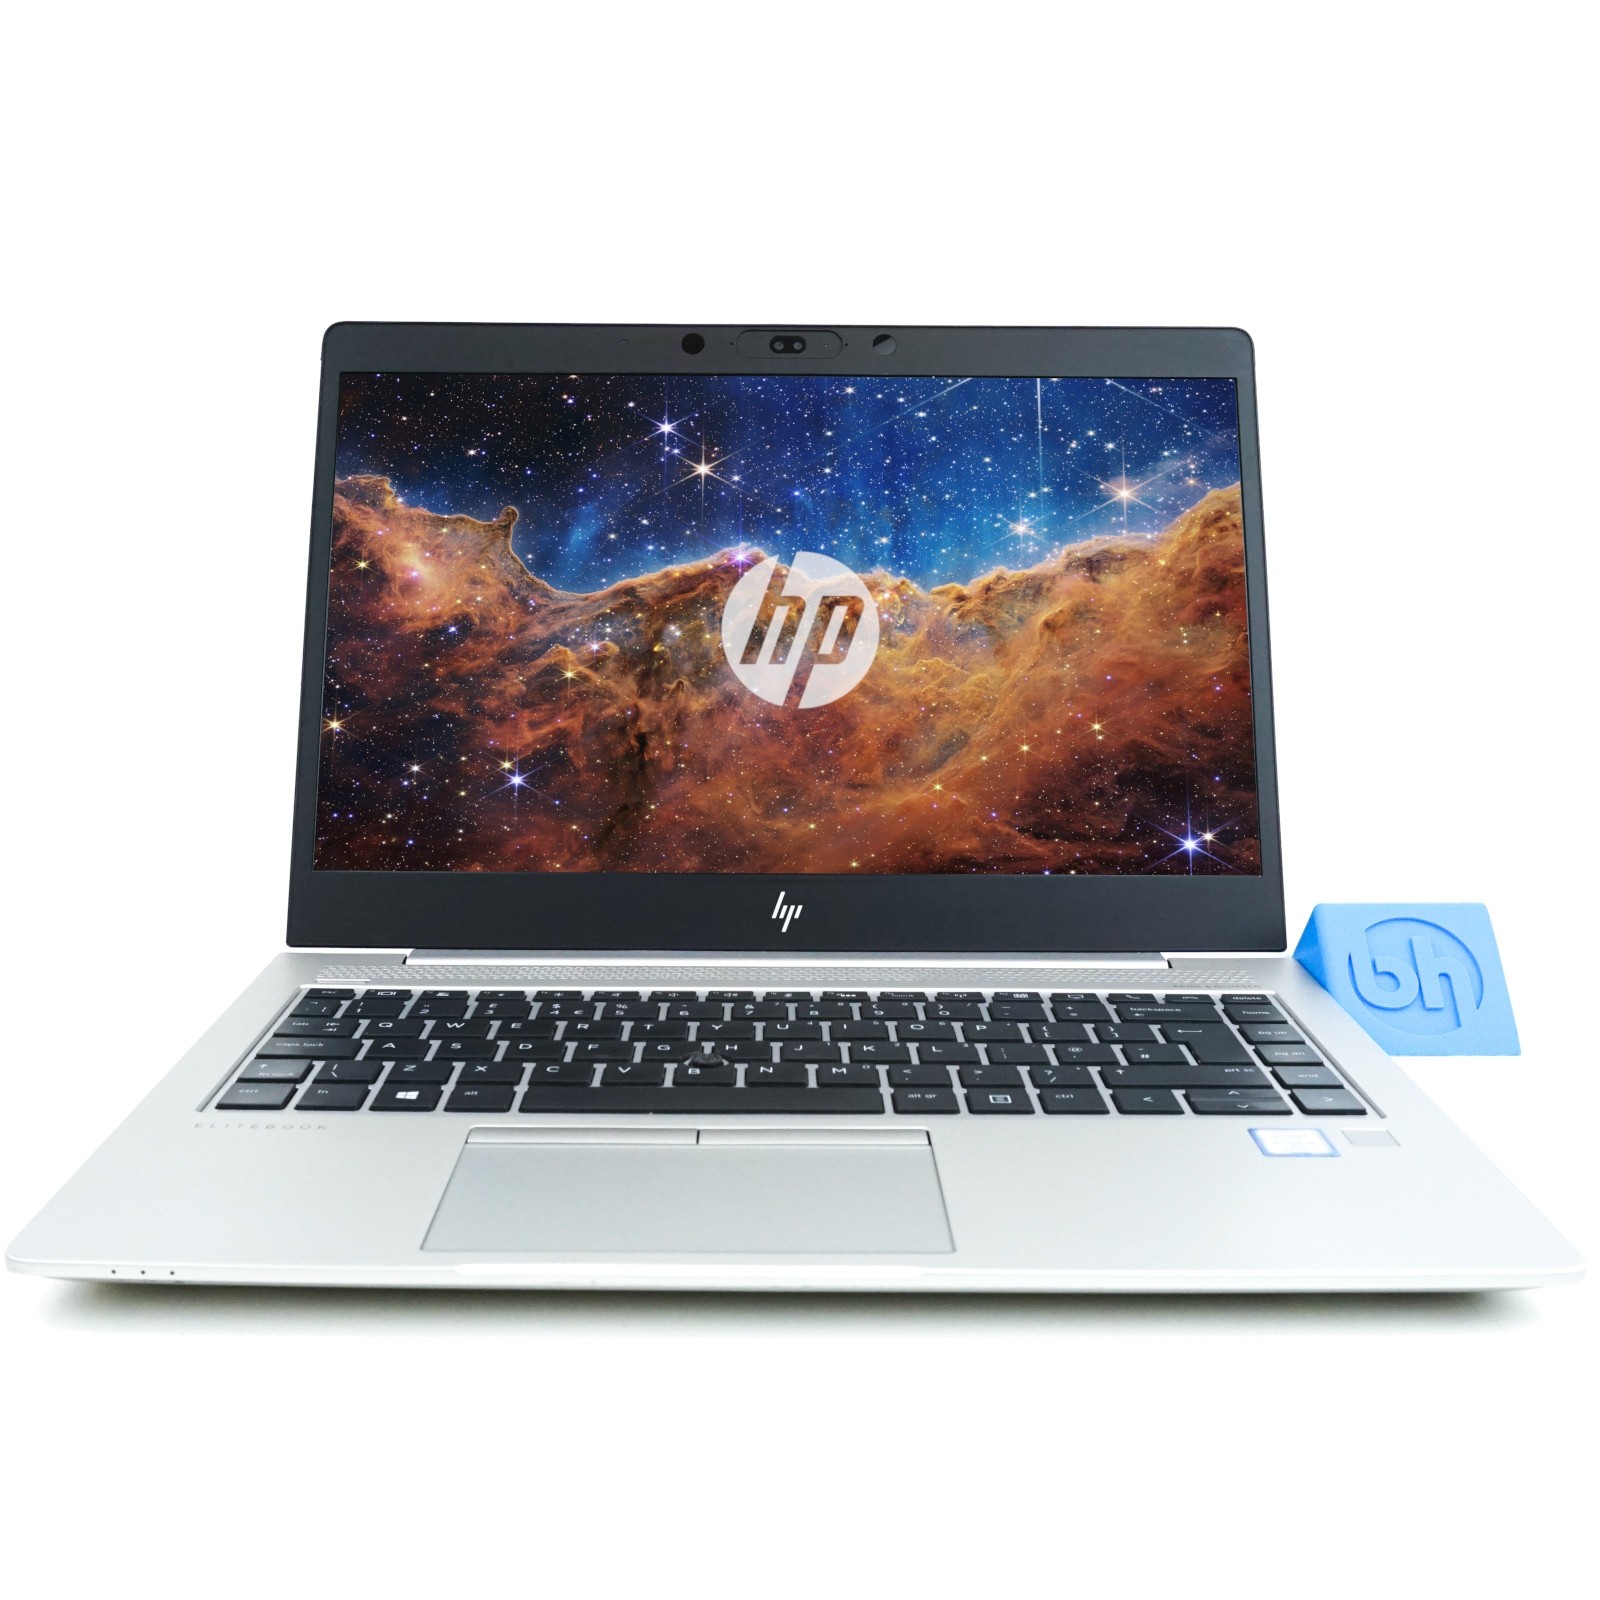 HP EliteBook 840 G5 14" Laptop - Intel i7 8th Gen, 8GB RAM, 256GB SSD, Windows 10 Pro (A+ Grade)